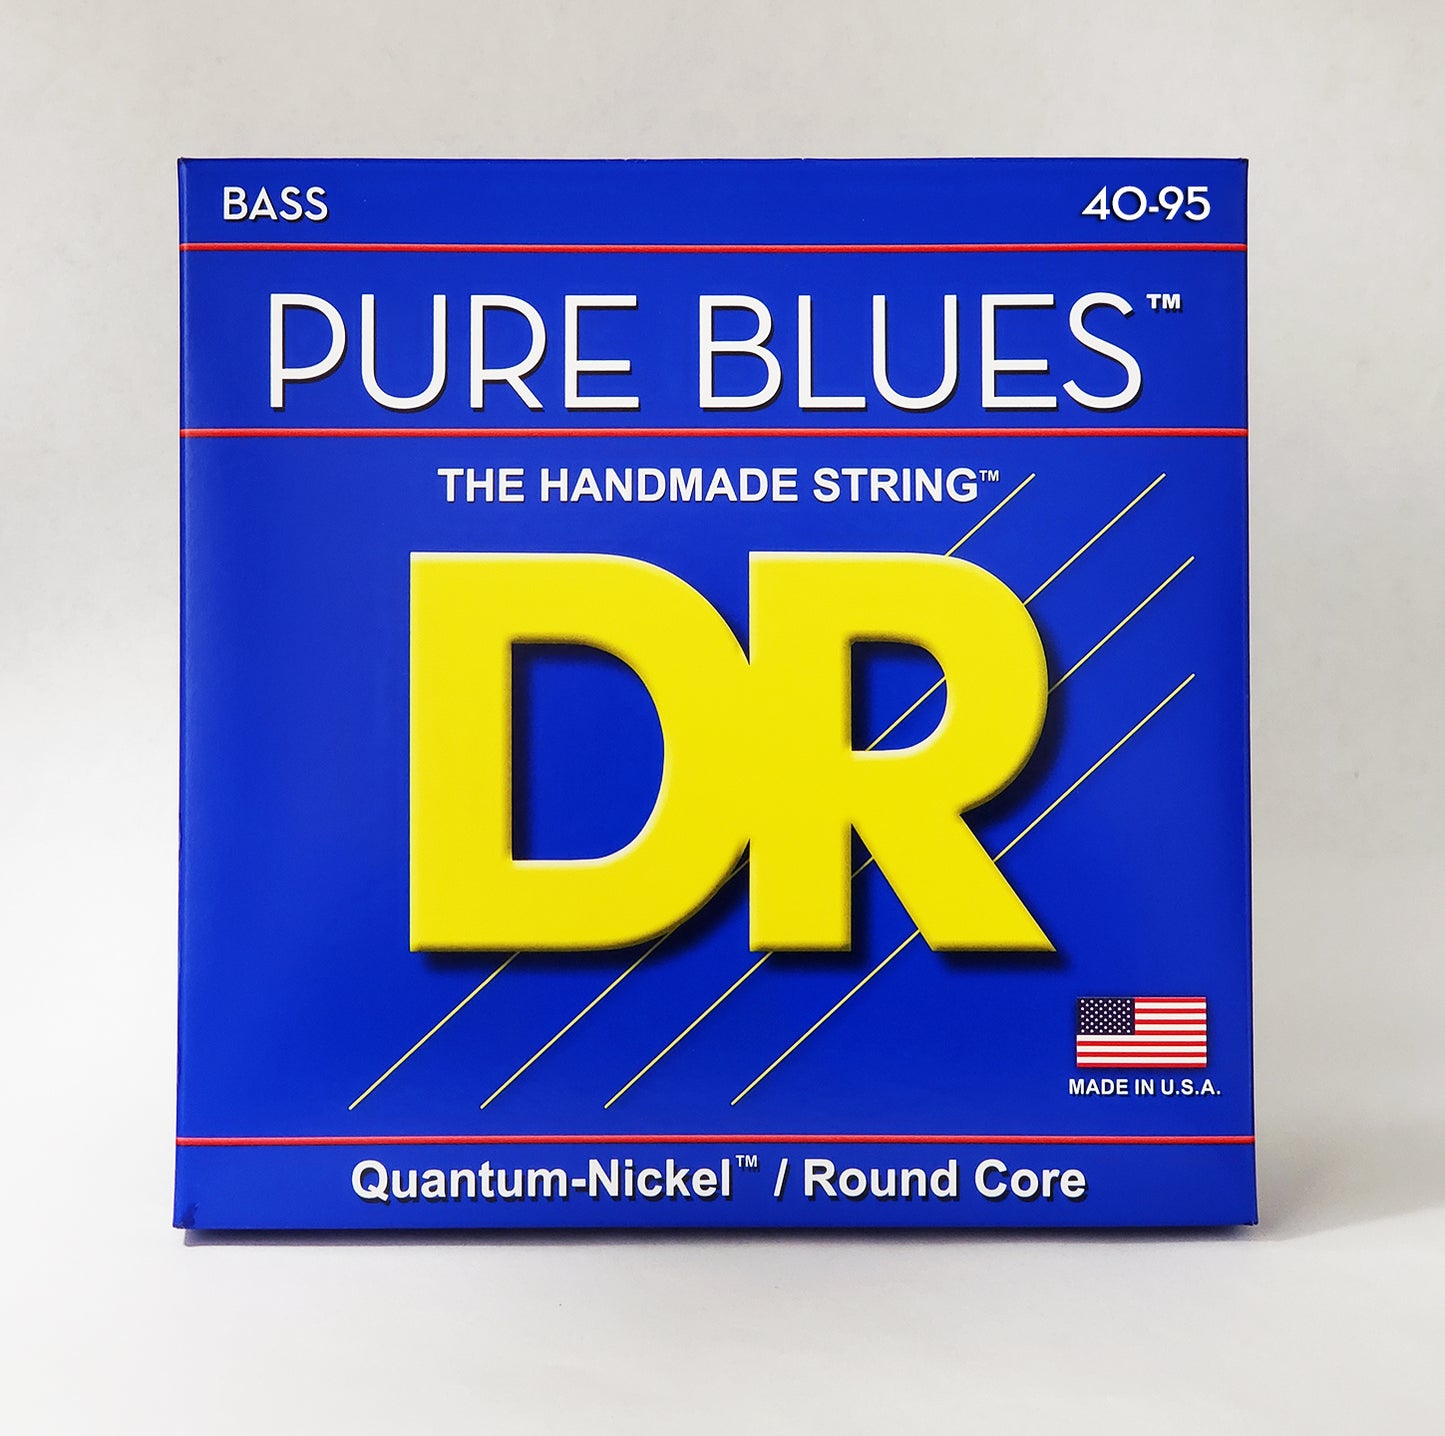 DR Pure Blues Bass Strings, 4-String 40-95, PBVW-40